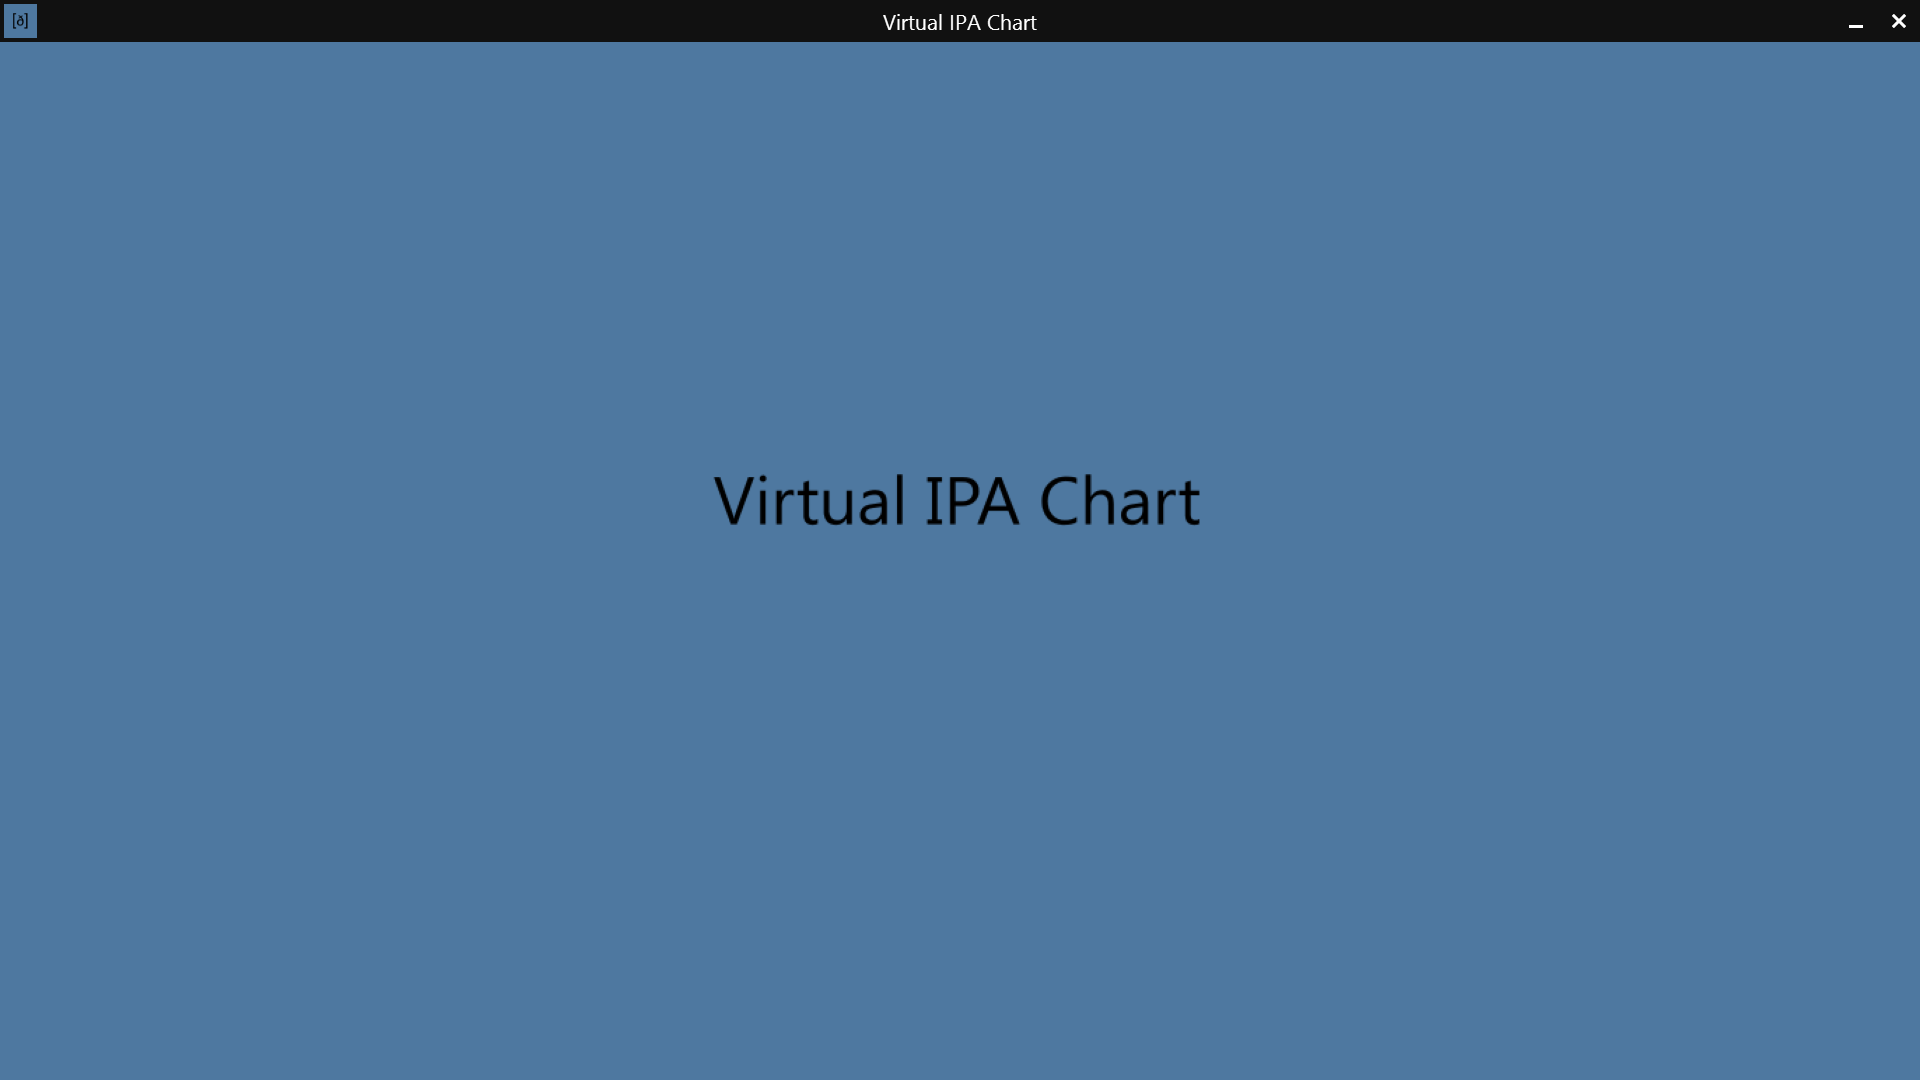 Interactive Vowel Chart